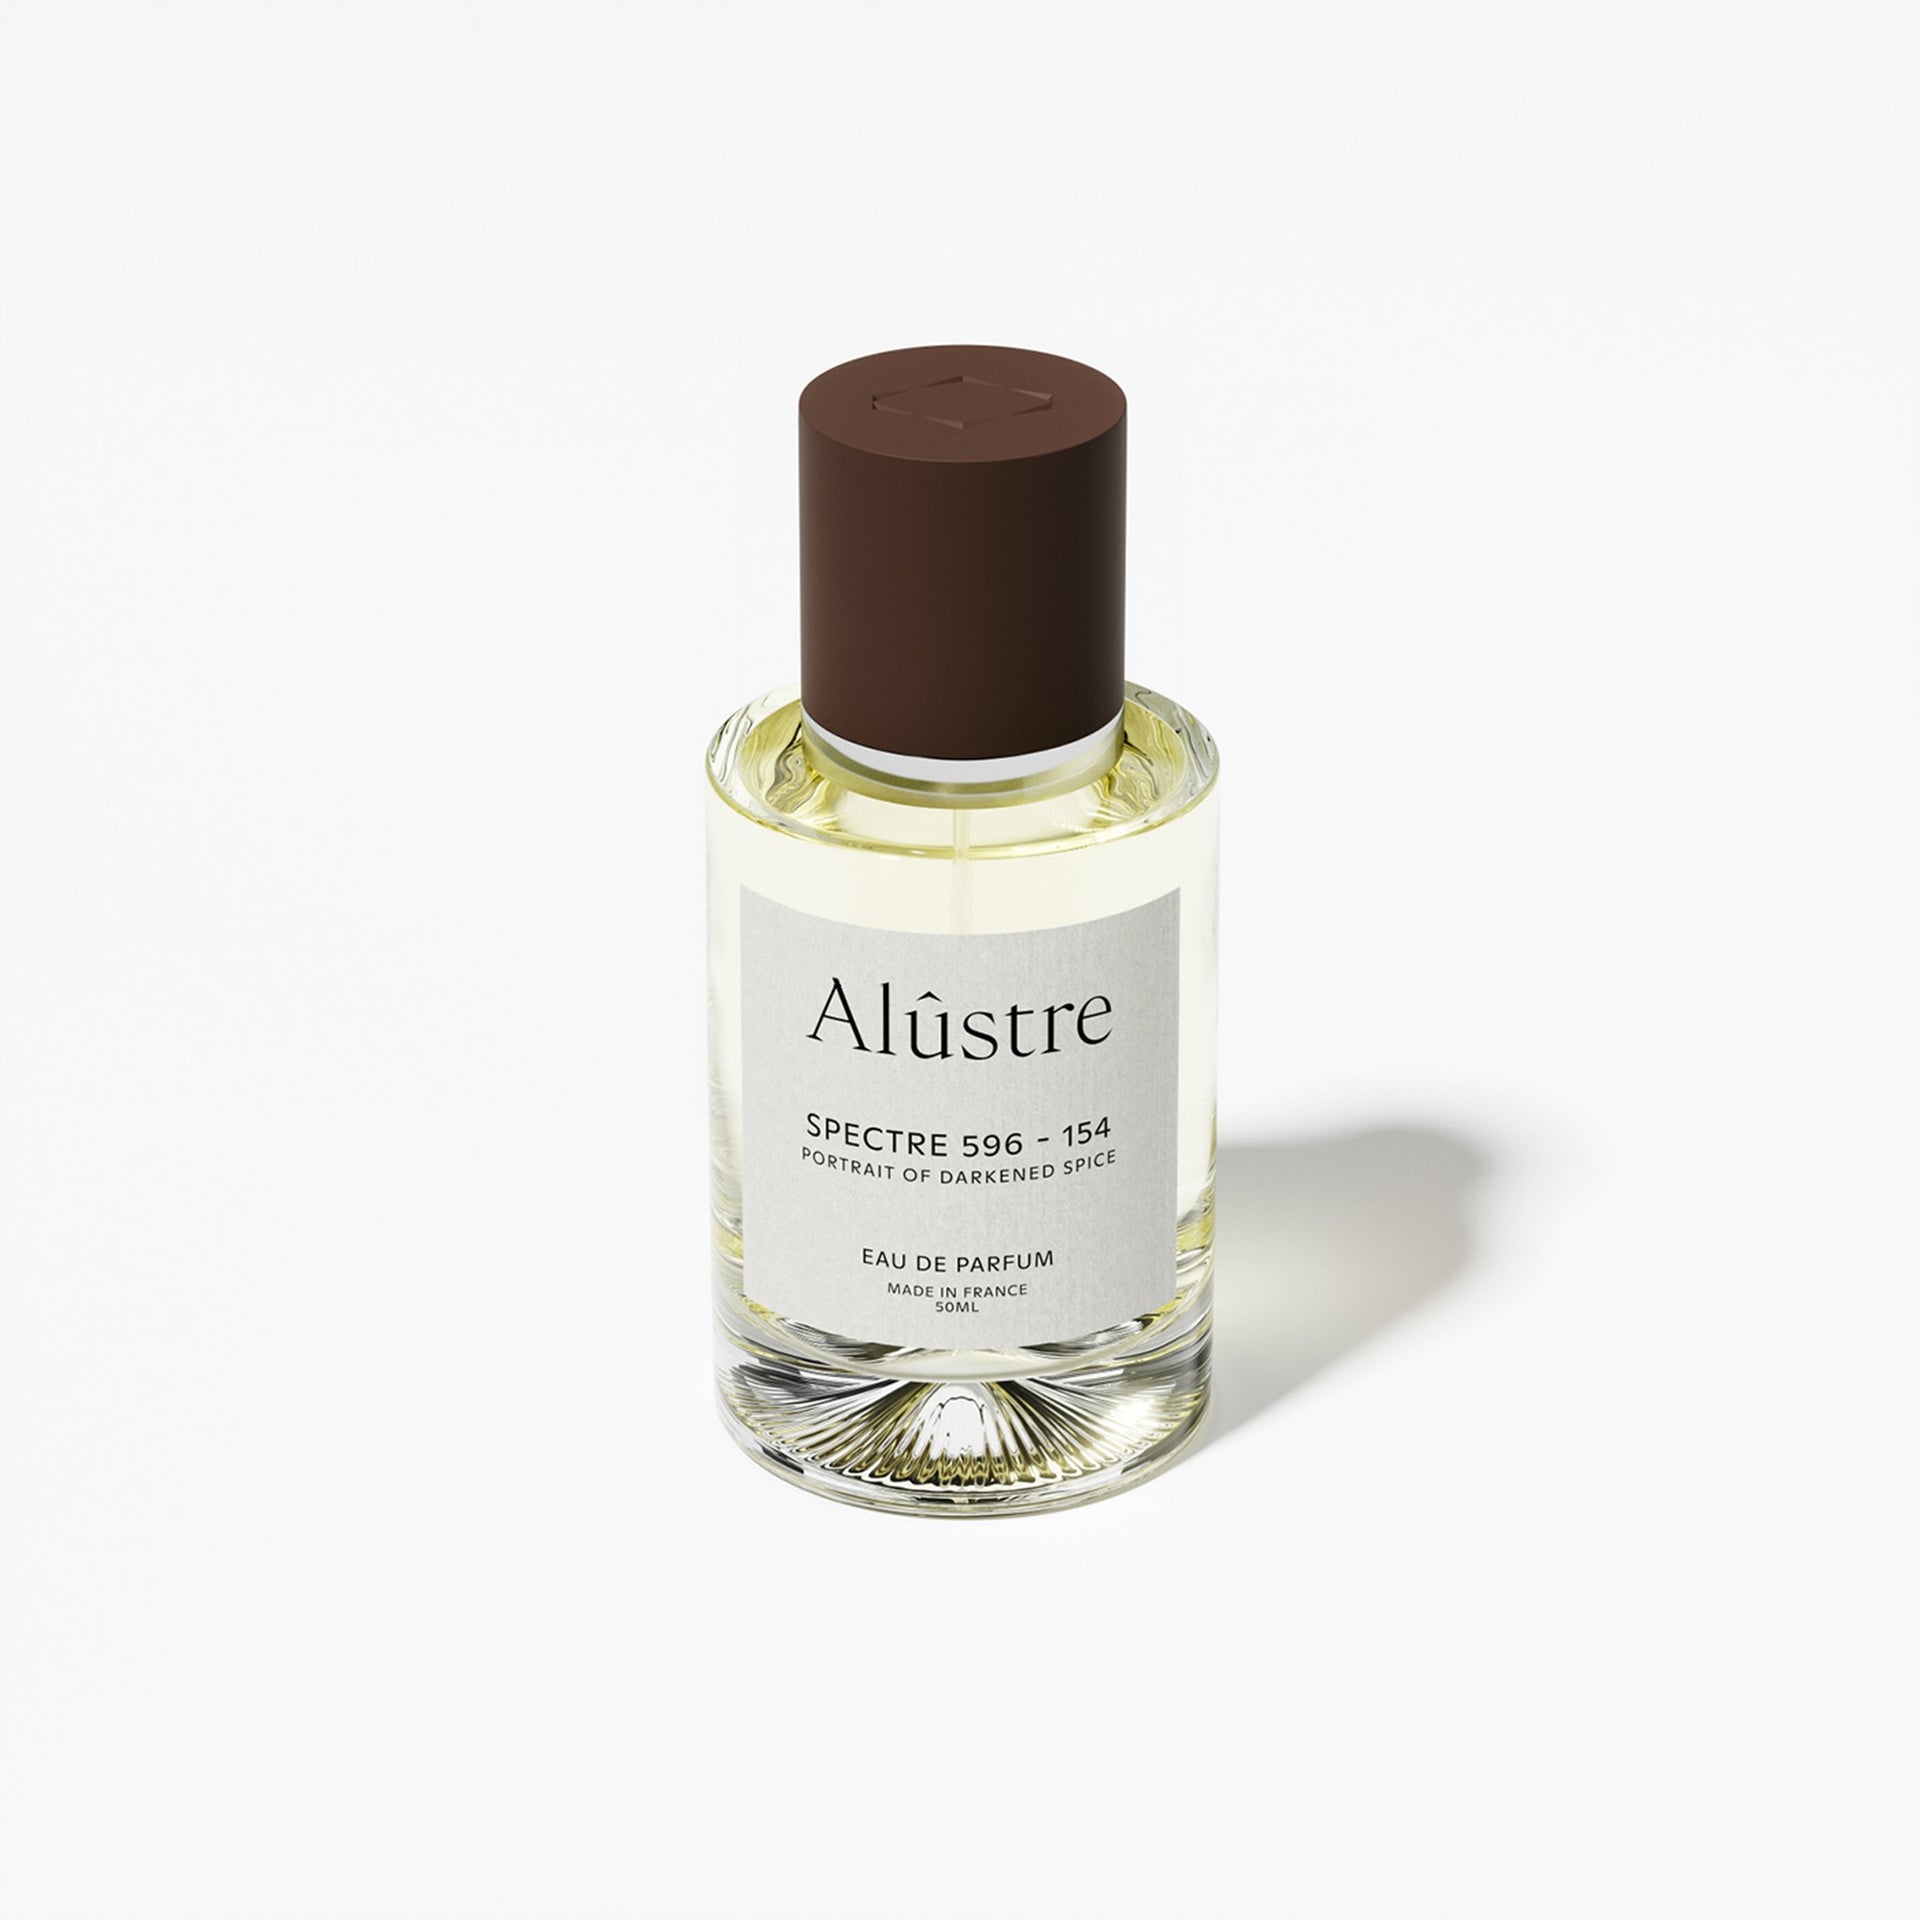 Alûstre Packshot Perfume 50Ml 596 154 02 (1)